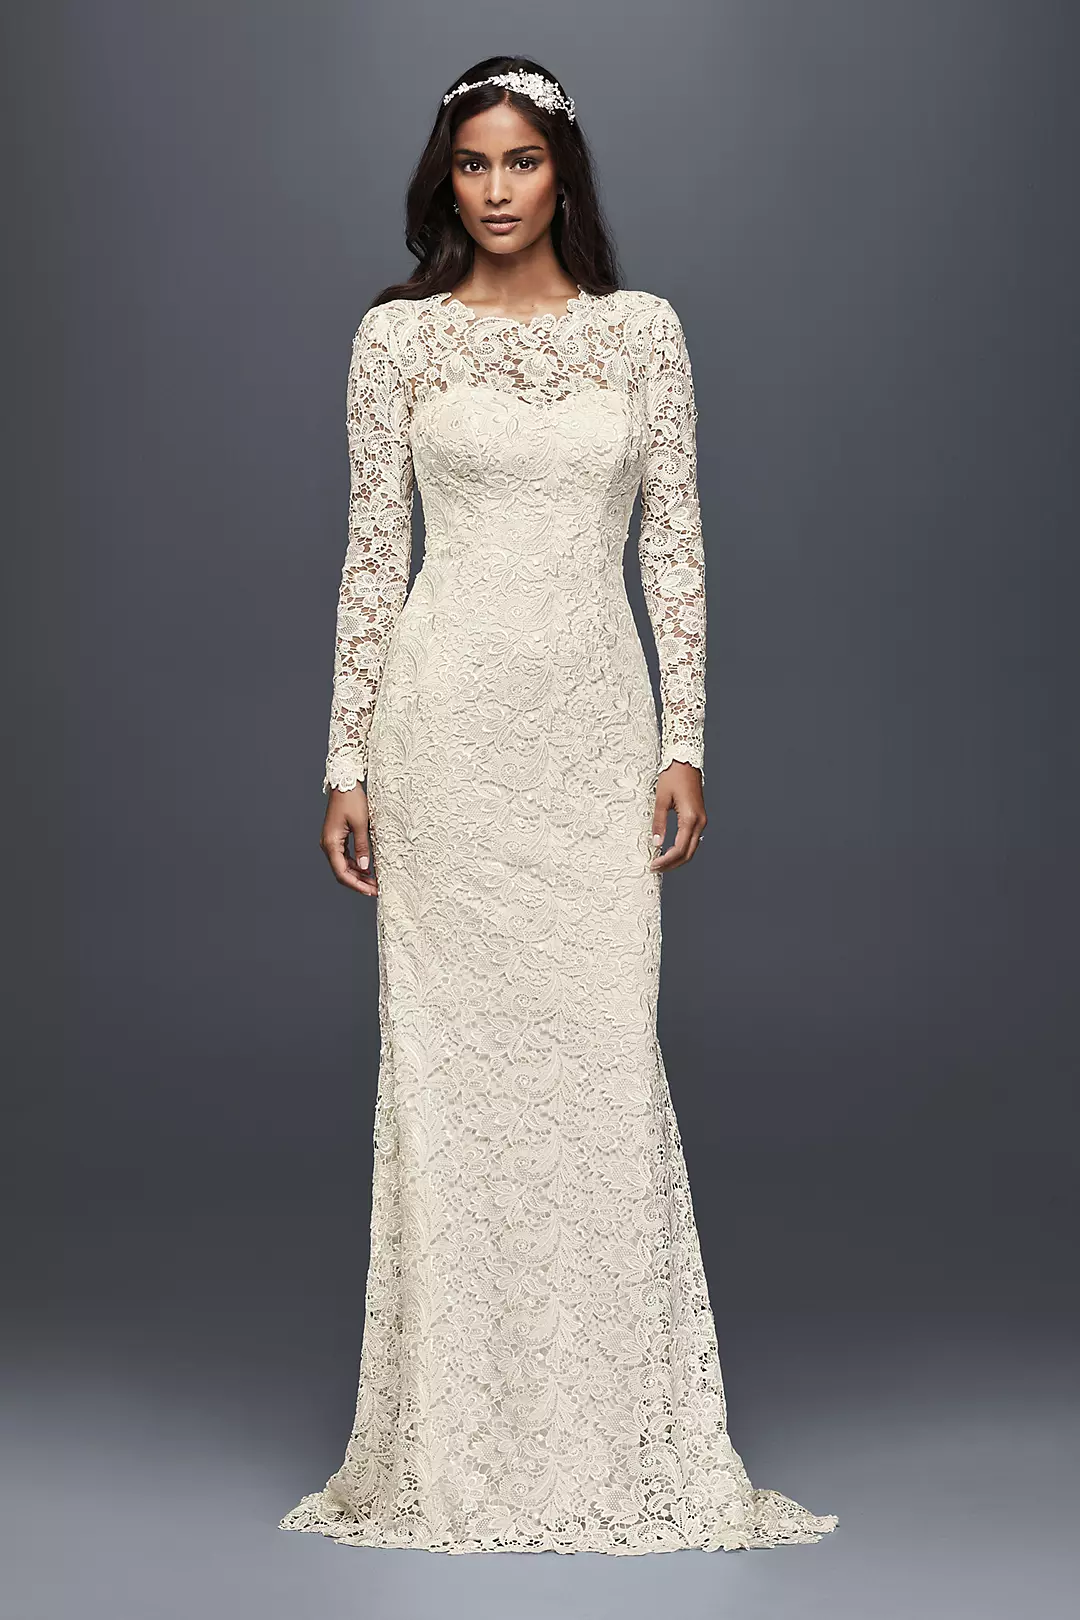 Long Sleeve Lace Wedding Dress with Open Back Image